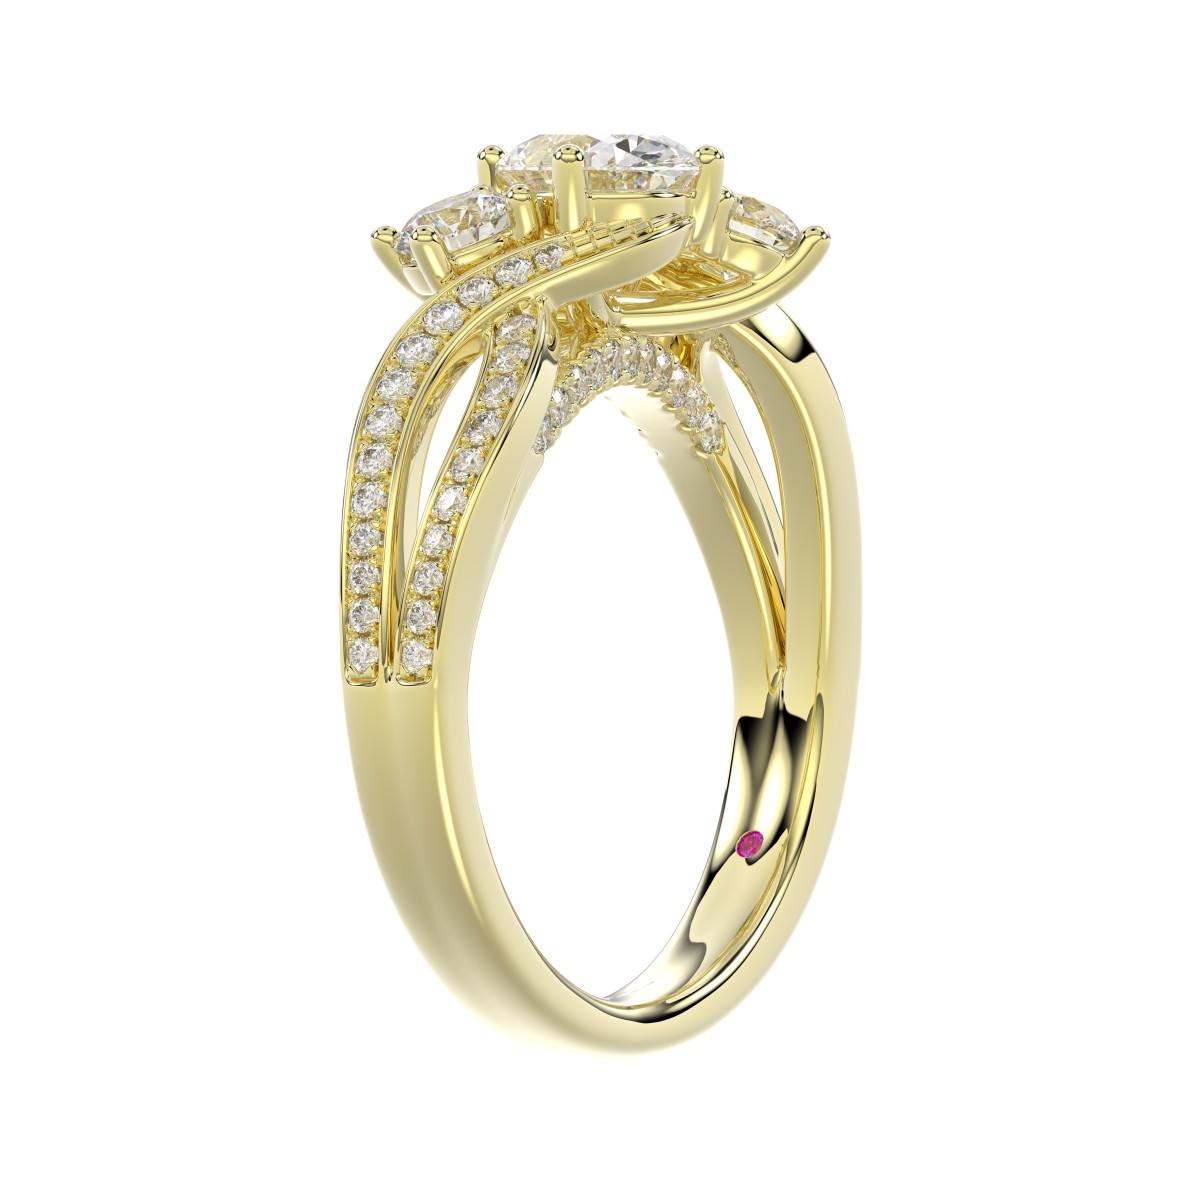 14K YELLOW GOLD 1 1/2CT ROUND/OVAL DIAMOND LADIES FASHION RING( CENTER STONE OVAL DIAMOND 3/4CT / 2 SIDE STONE ROUND DIAMOND 3/8CT)